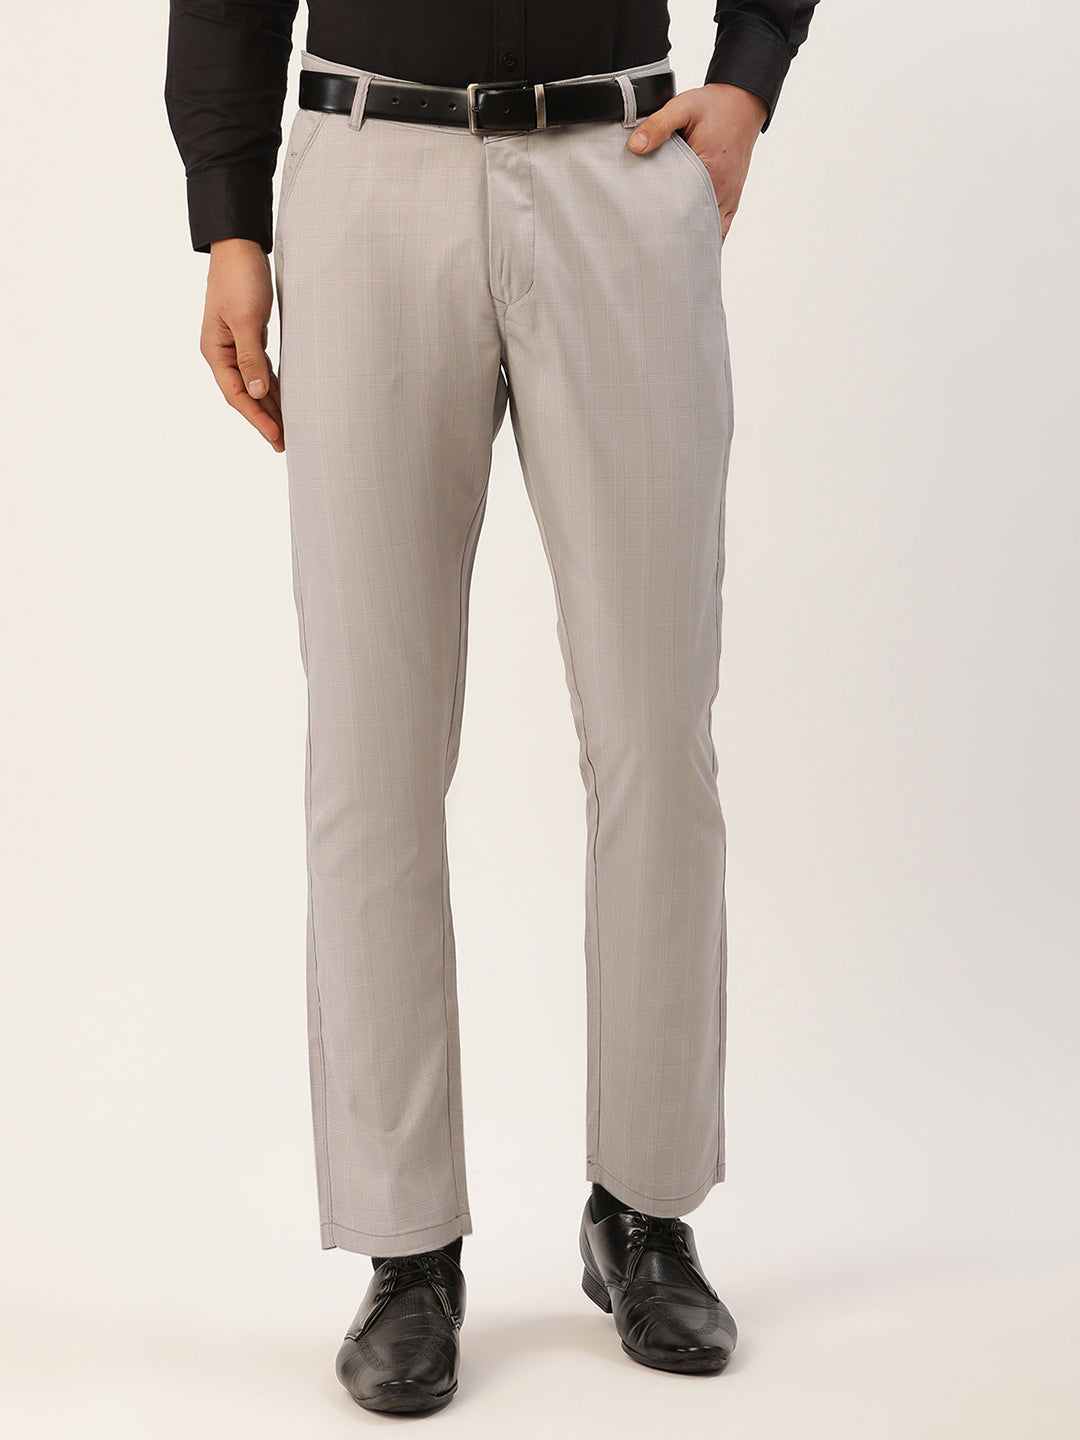 Men's Grey Checked Formal Trousers FGP 270 Grey Jainish – Trendia